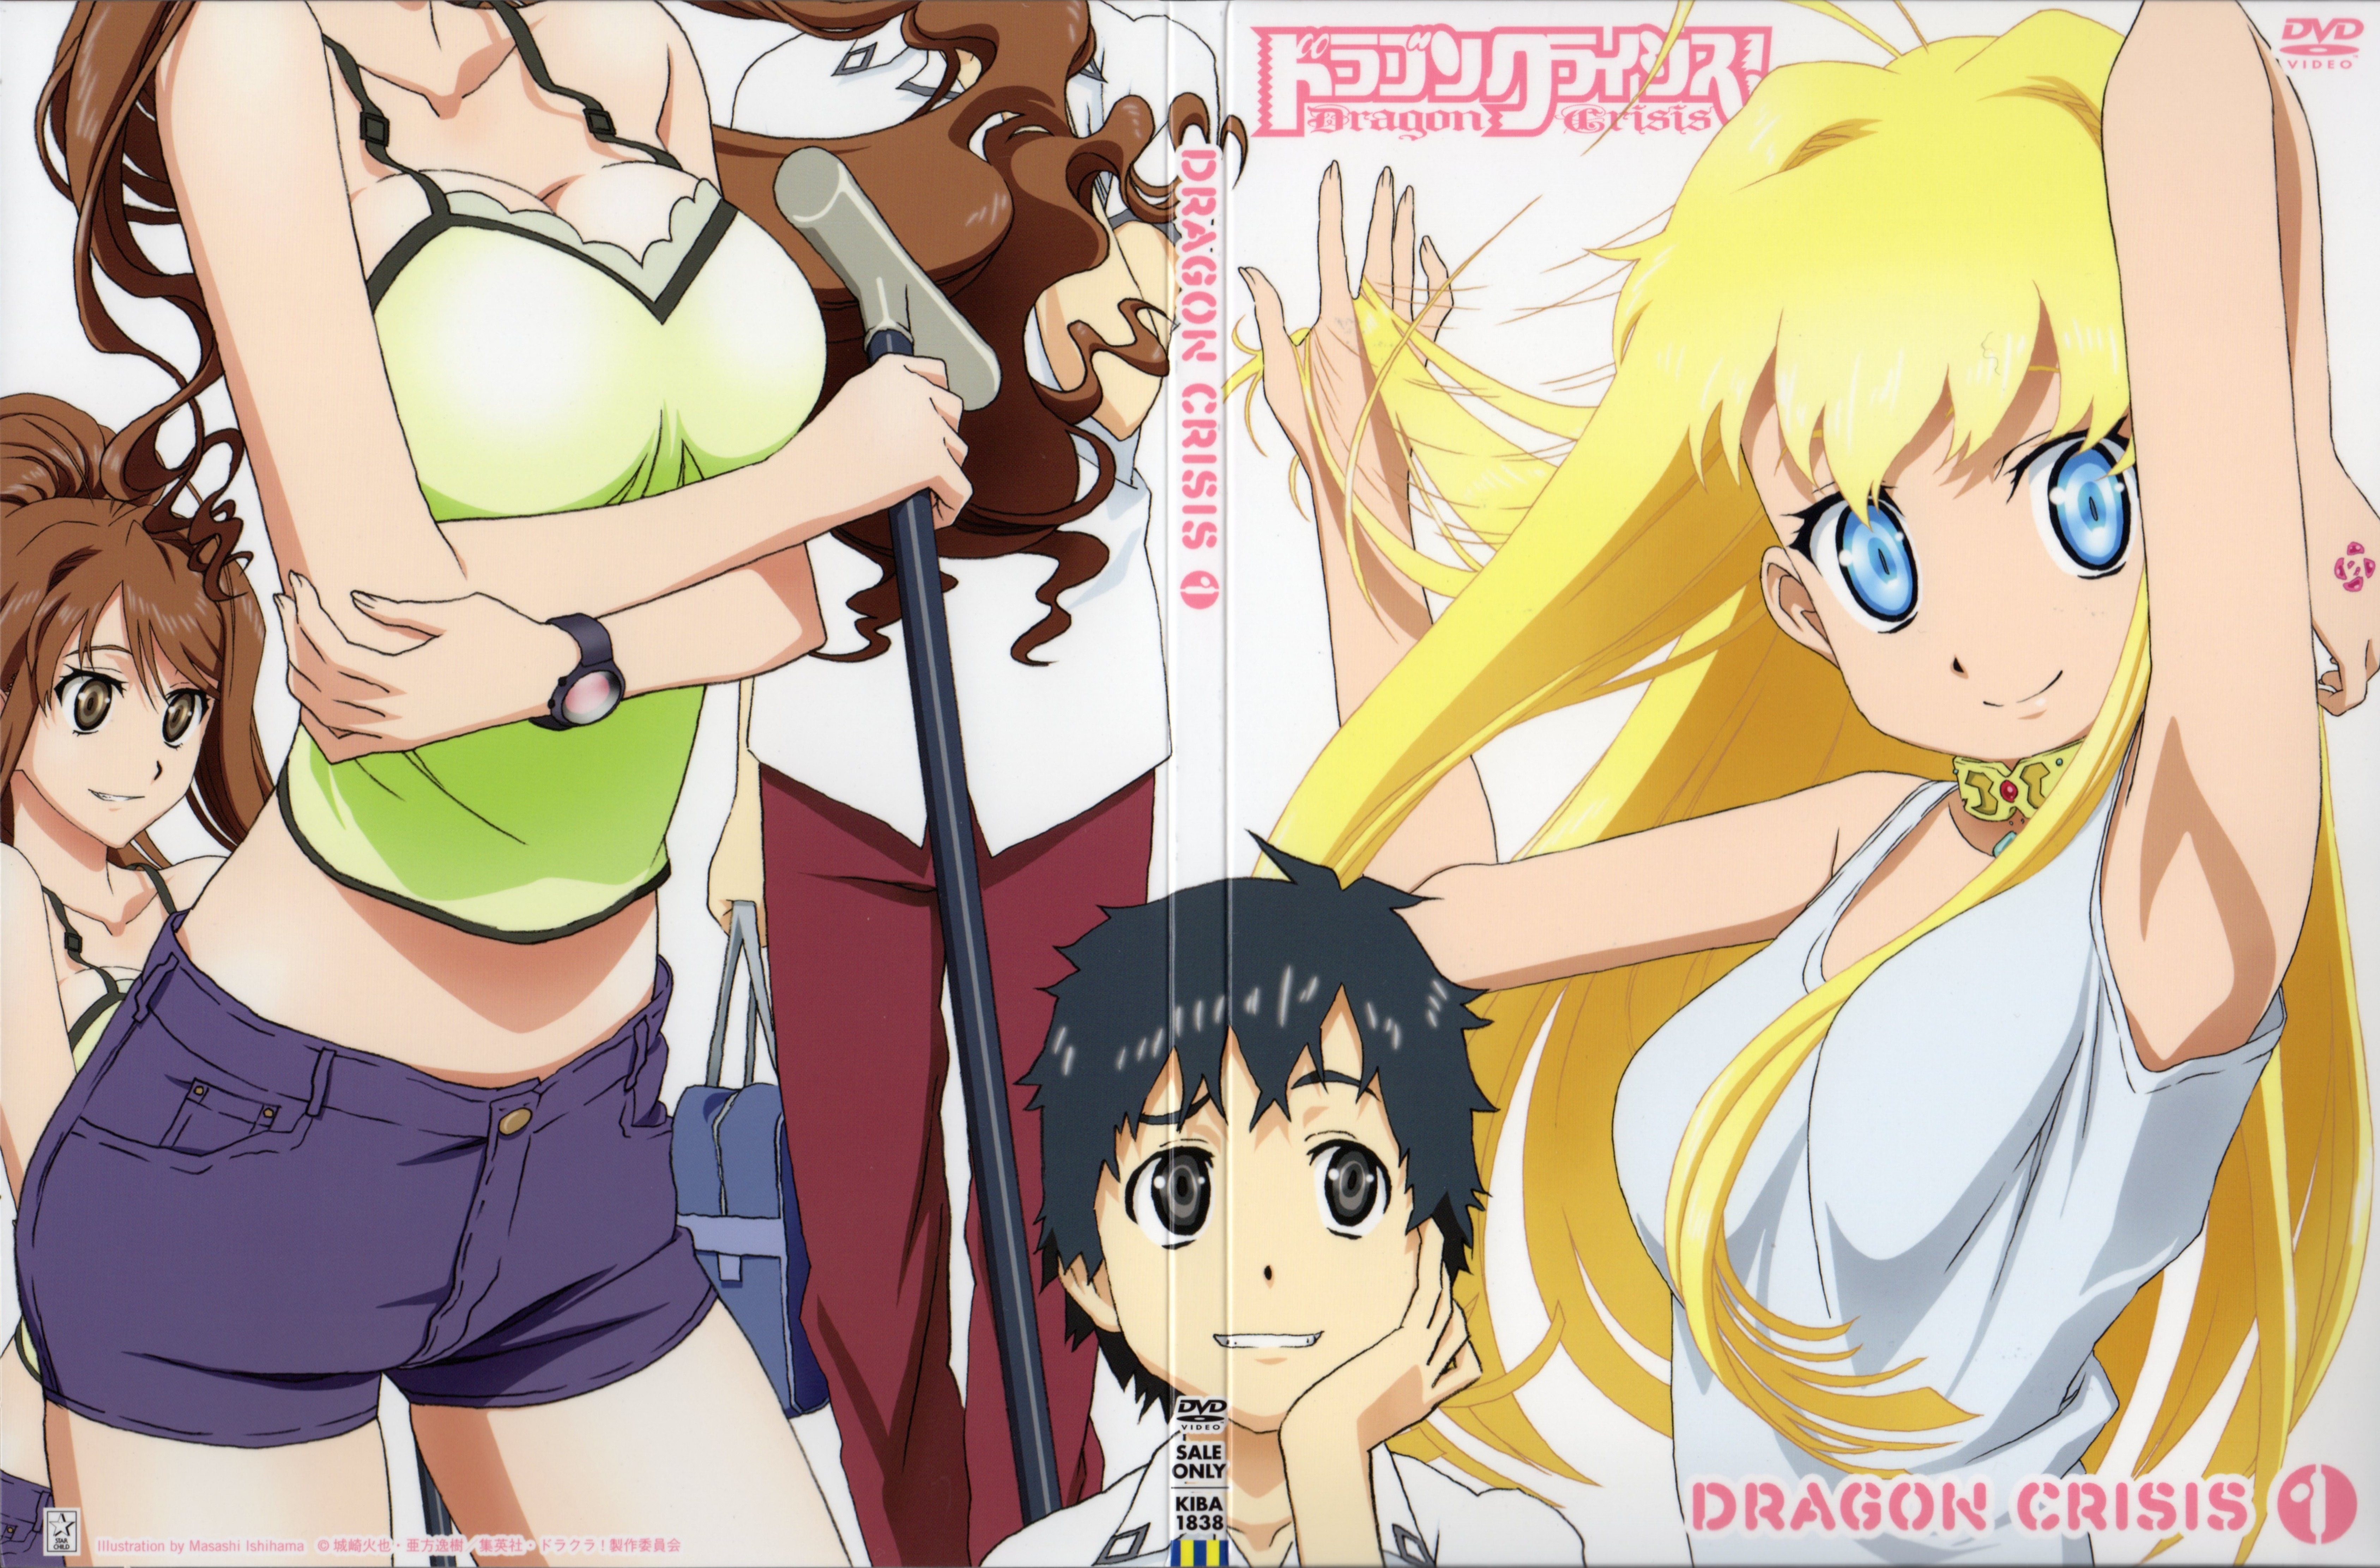 Rose (Dragon Crisis) Crisis! Anime Image Board